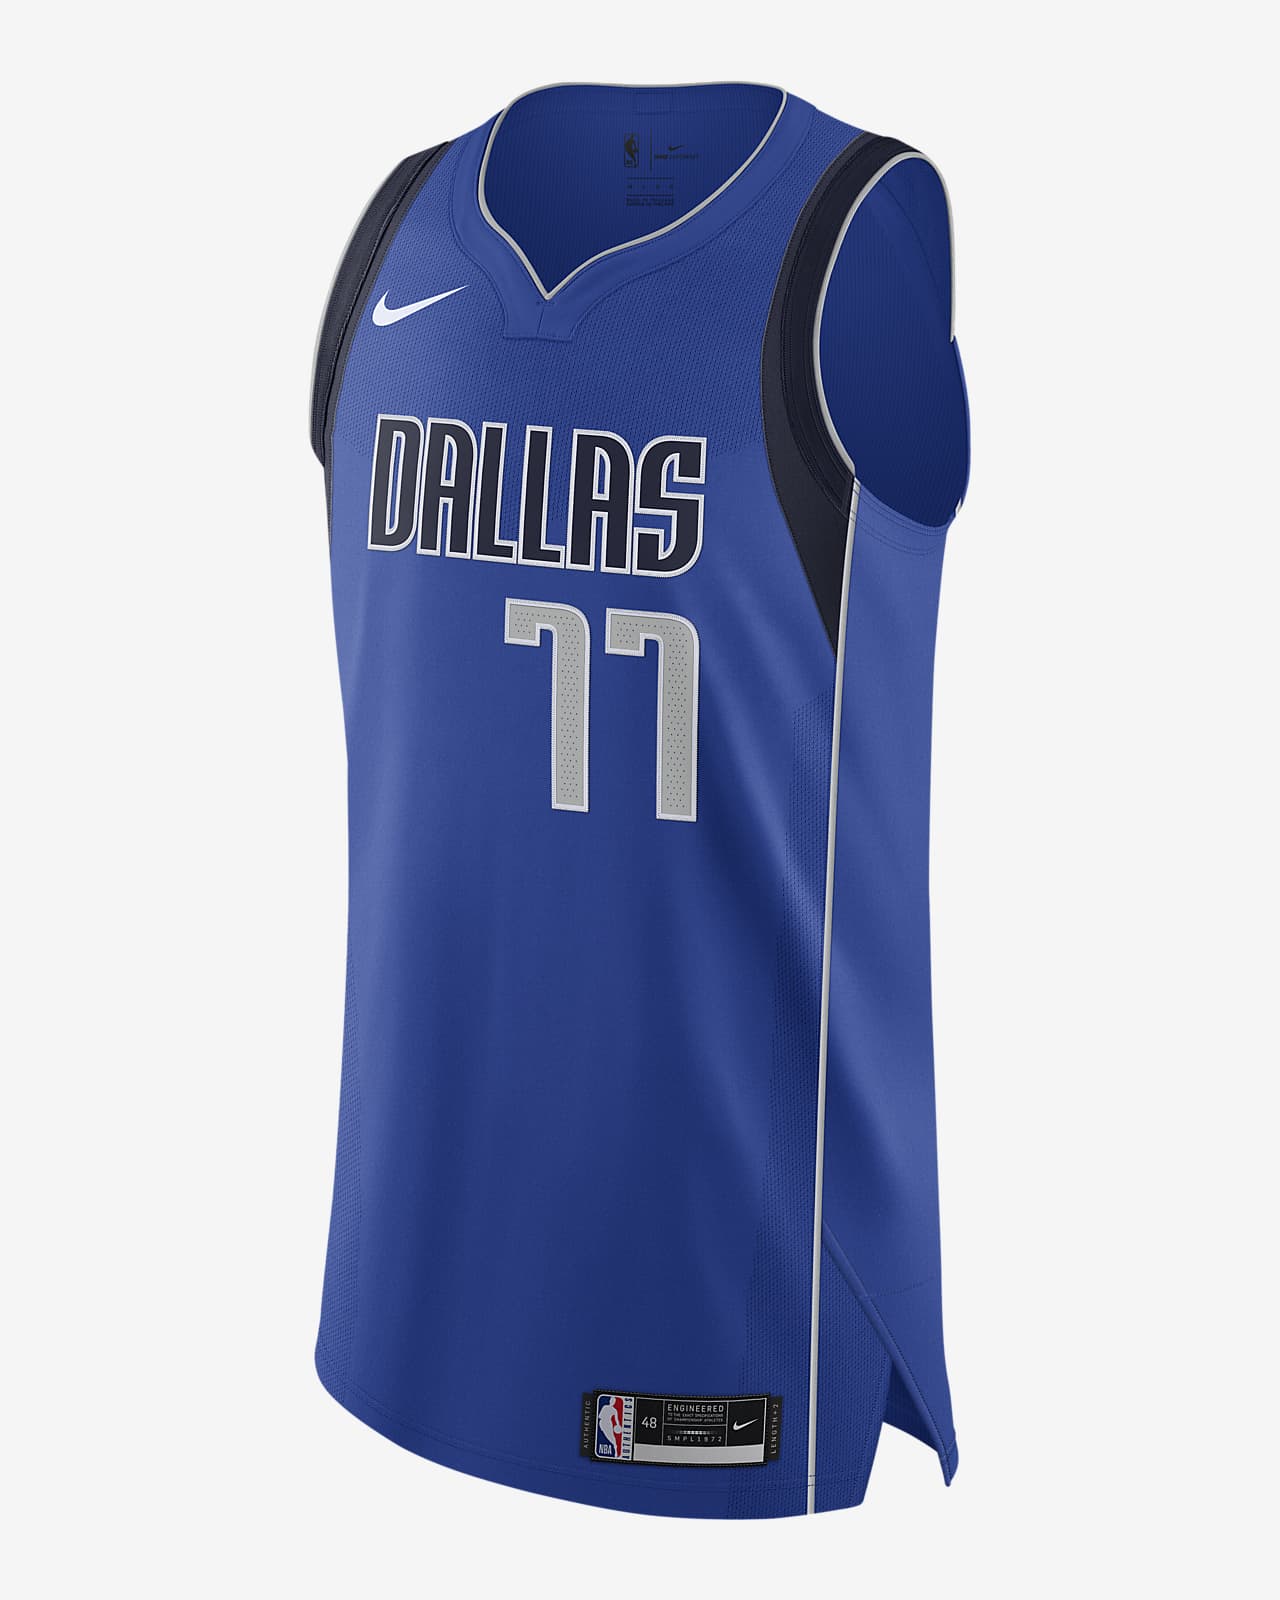 Luka Doncic Mavericks Icon Edition 2020 Nike NBA Authentic Jersey